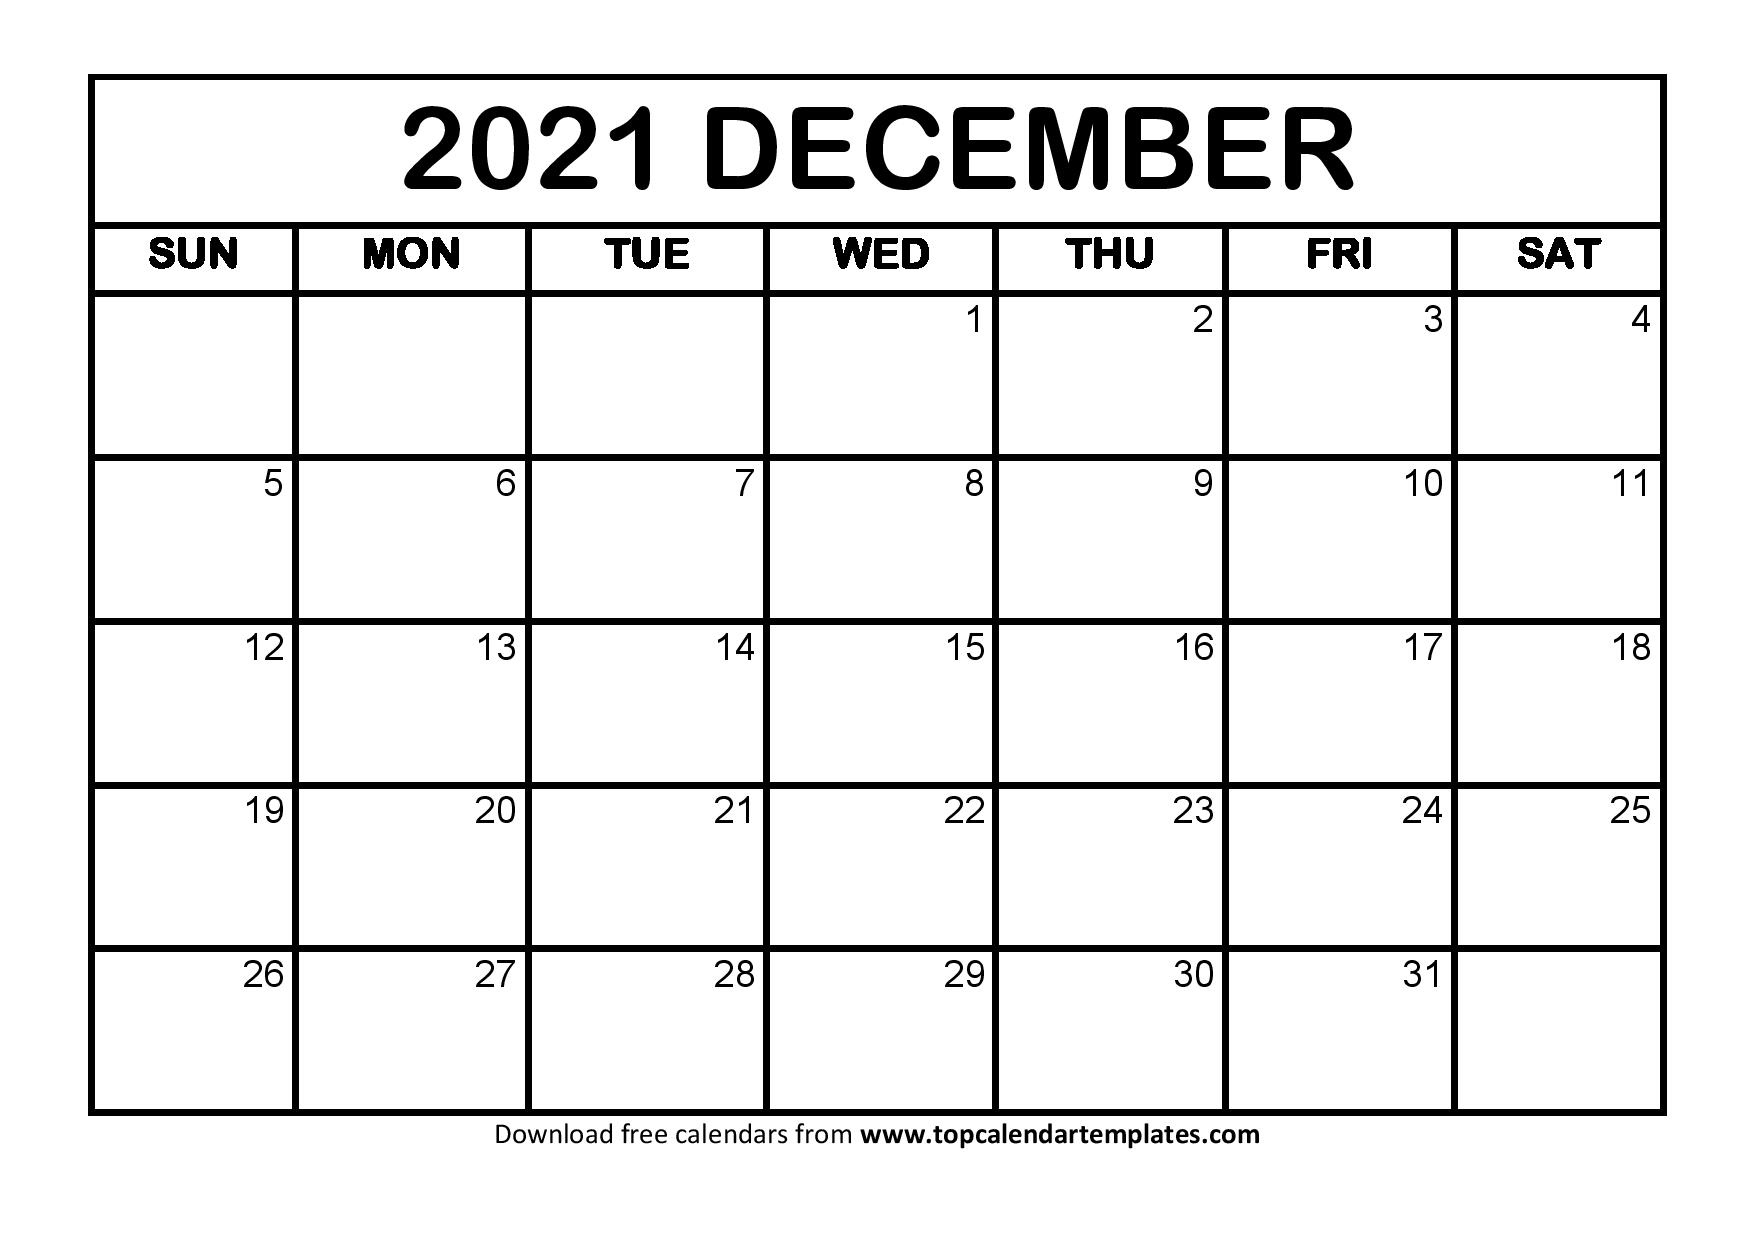 December 2021 Printable Calendar - Monthly Templates December 2021 Calendar Image